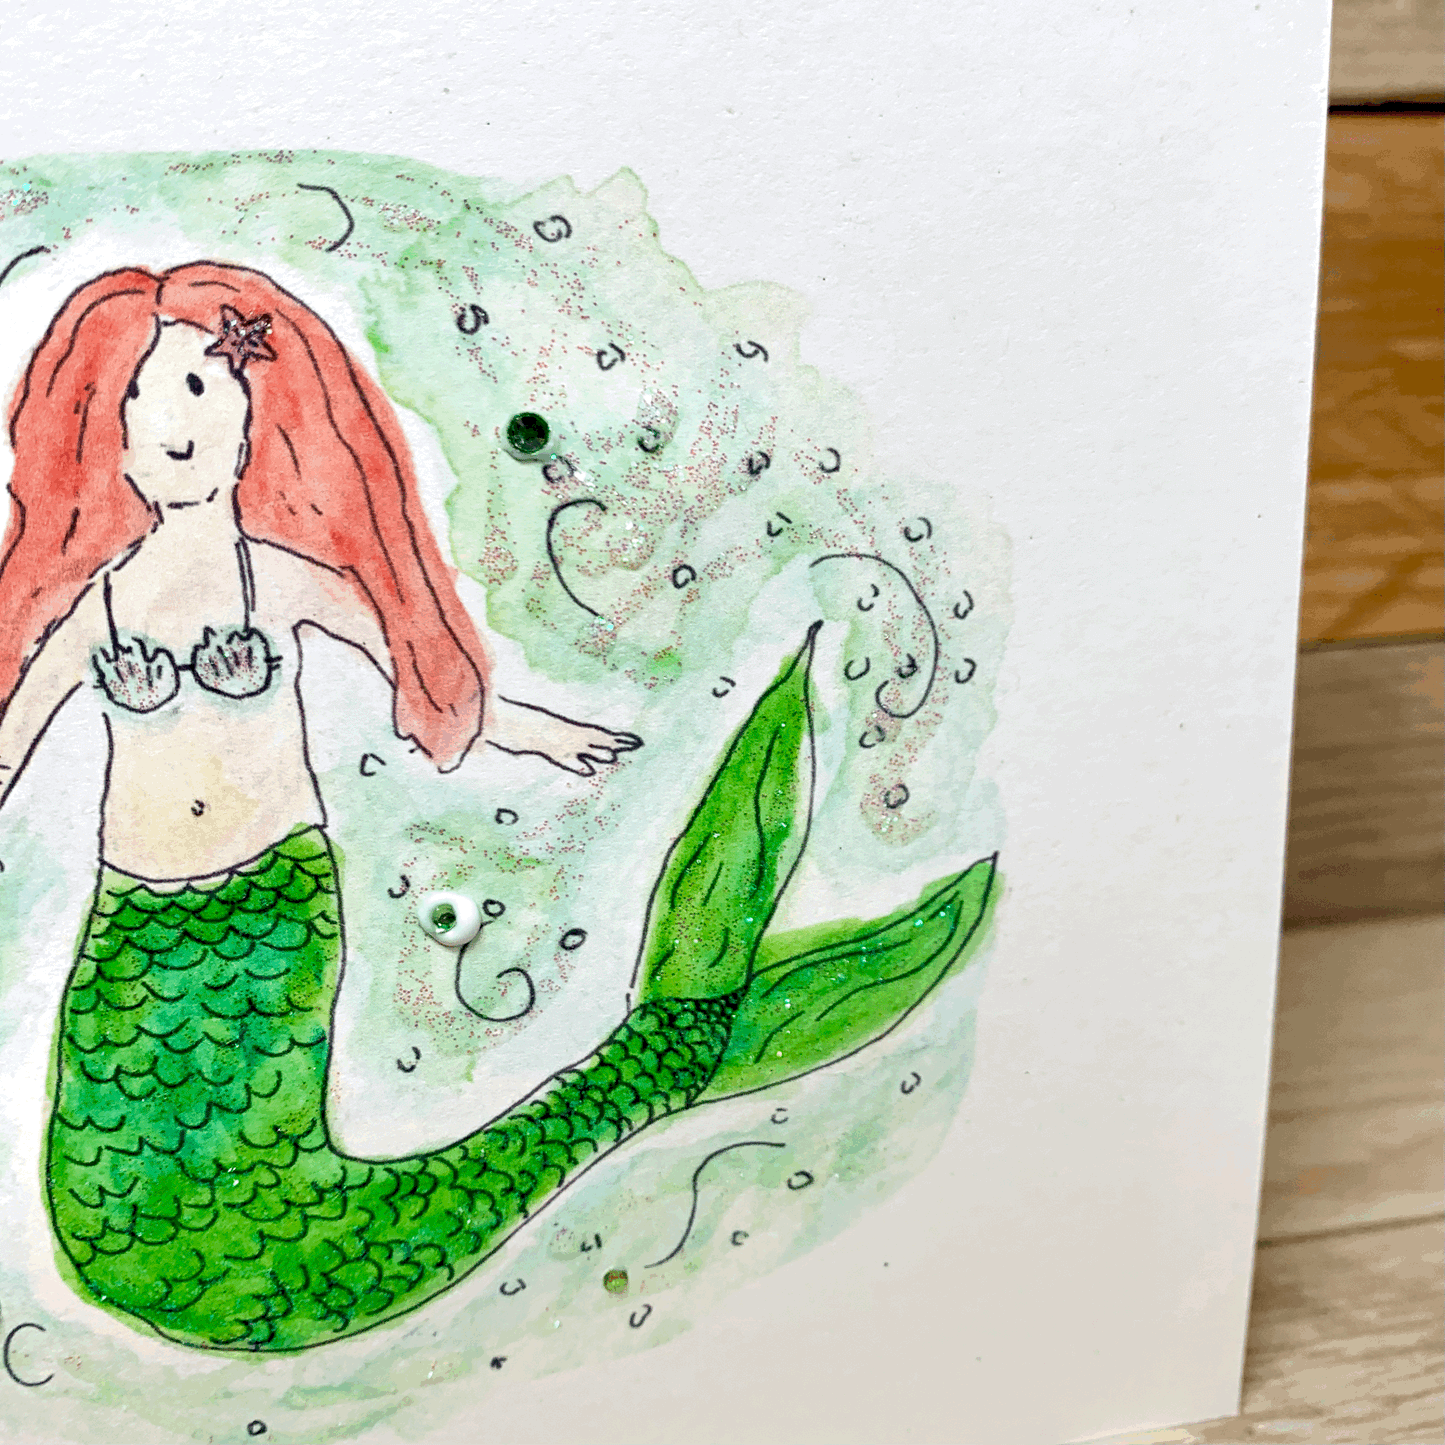 Maia the Mermaid Birthday Card - Arty Bee Designs 